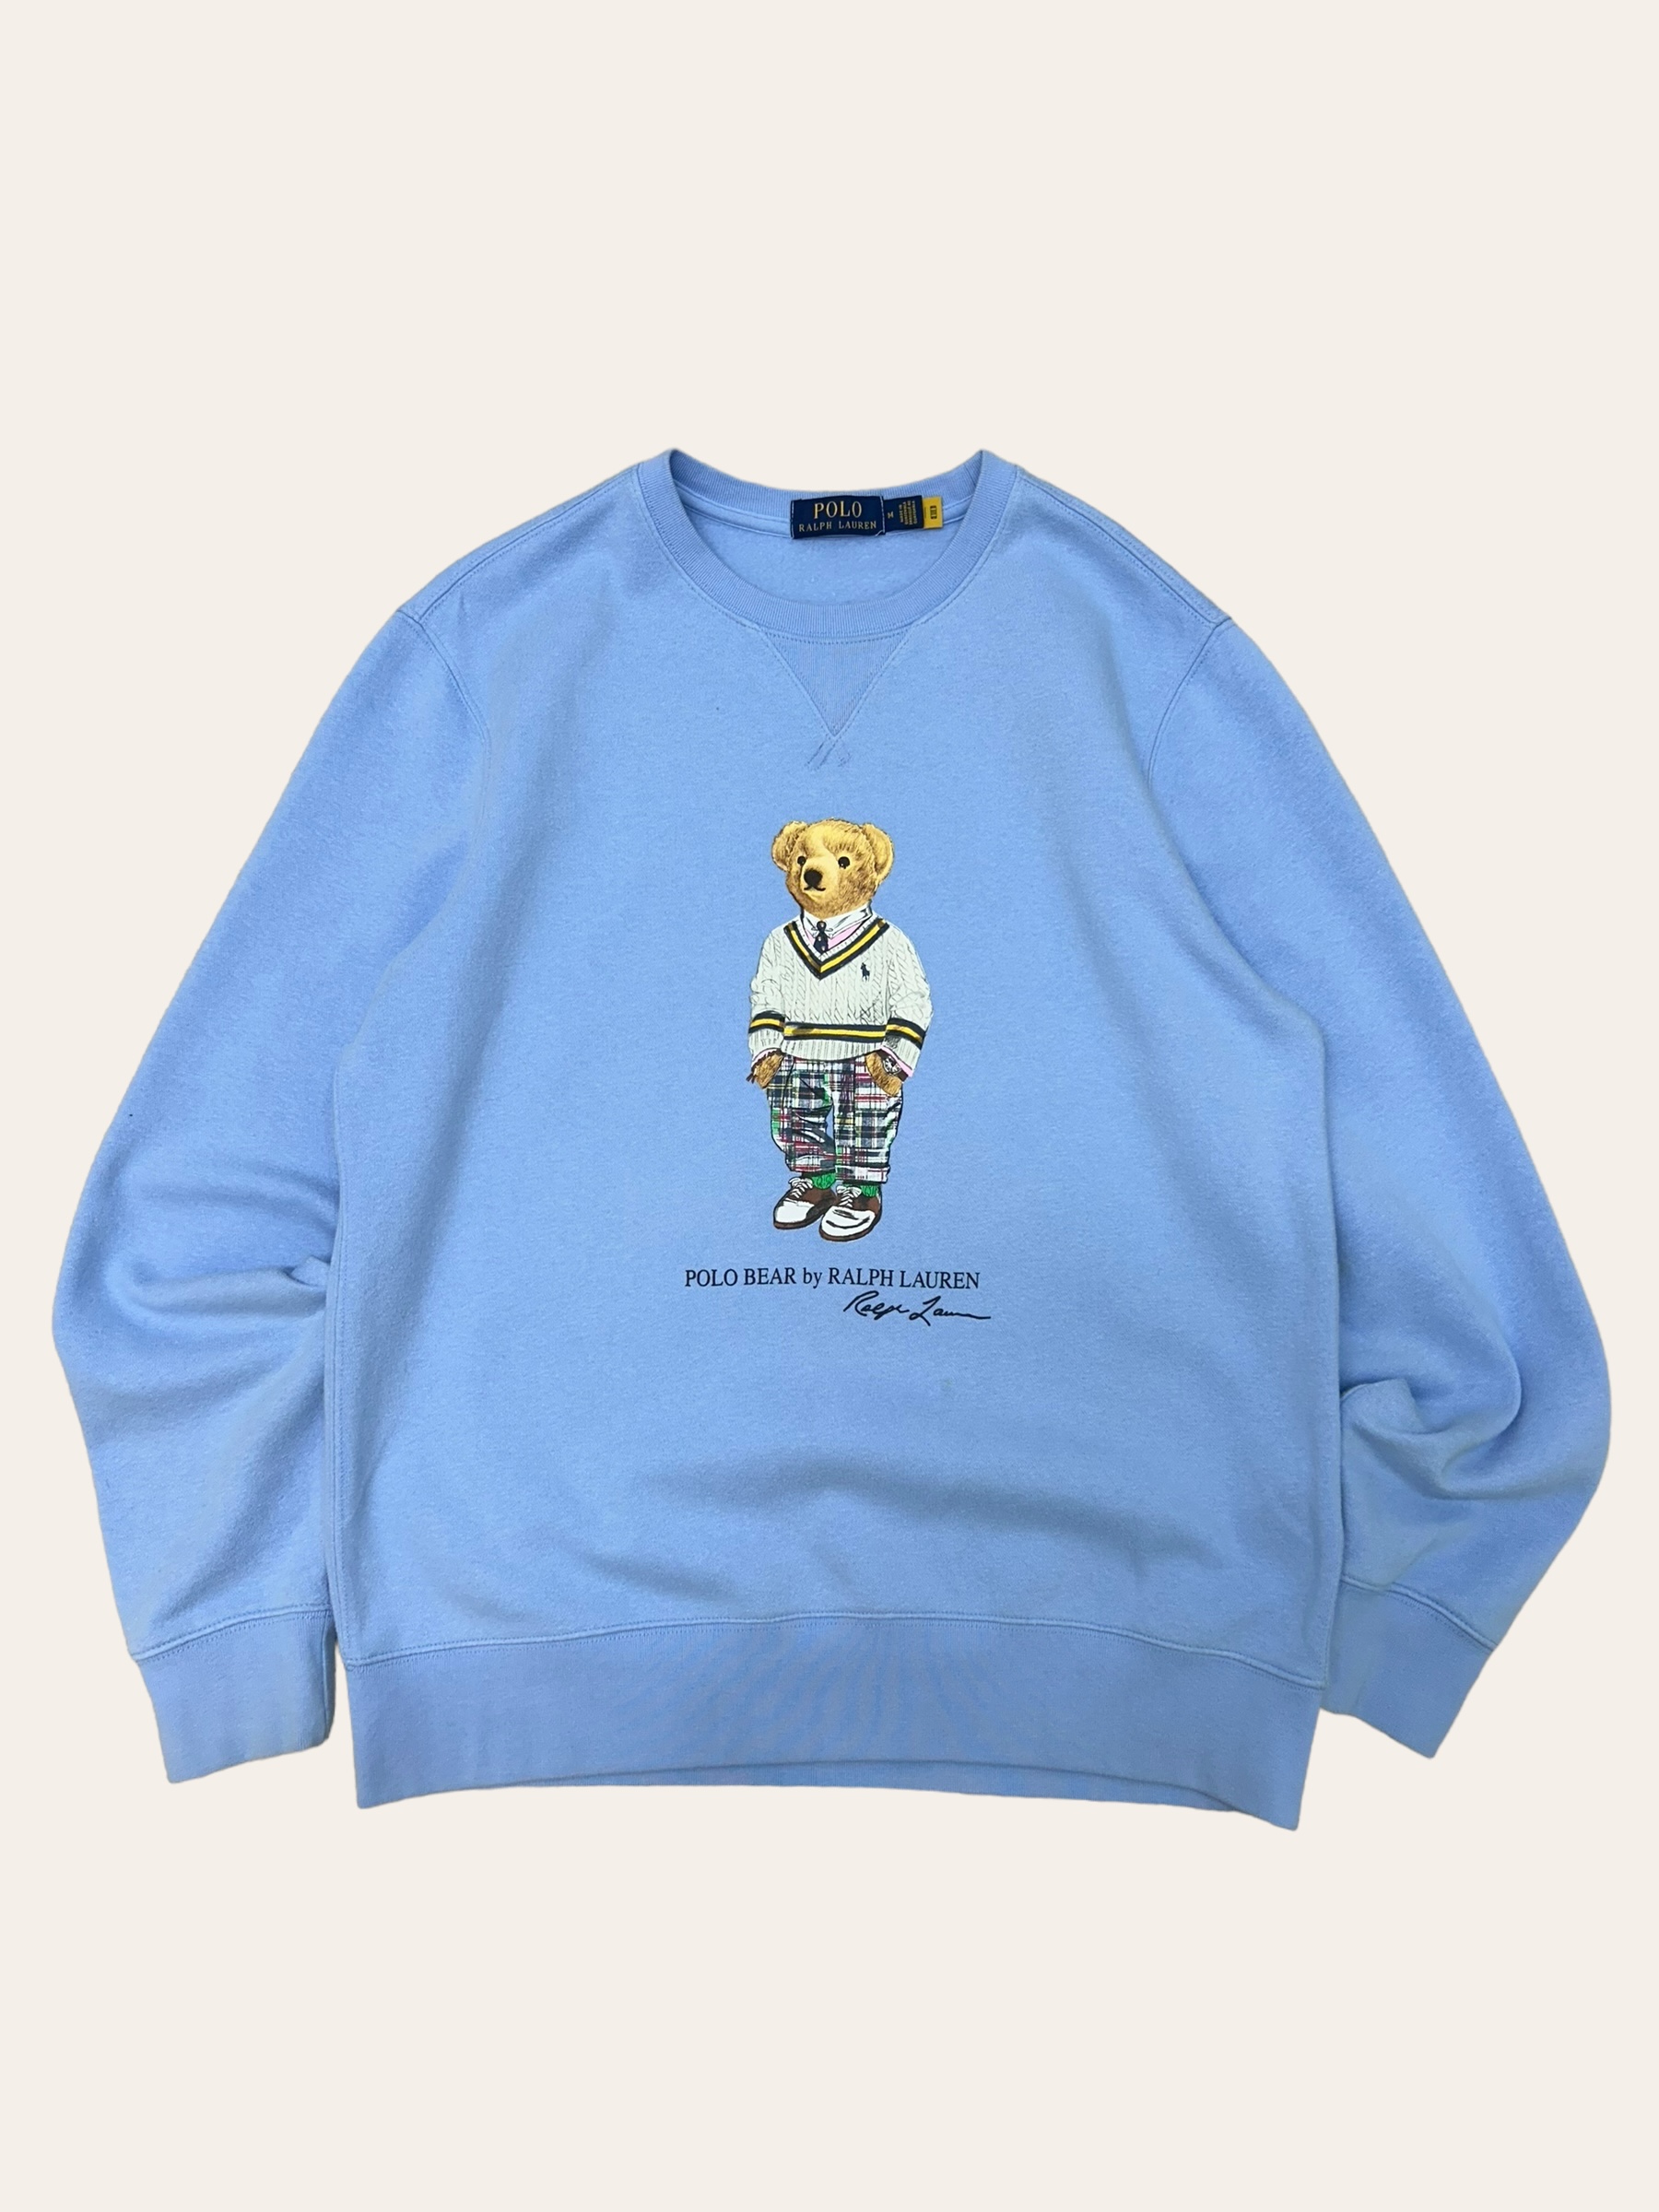 Polo ralph lauren sky blue bear printing sweatshirt M